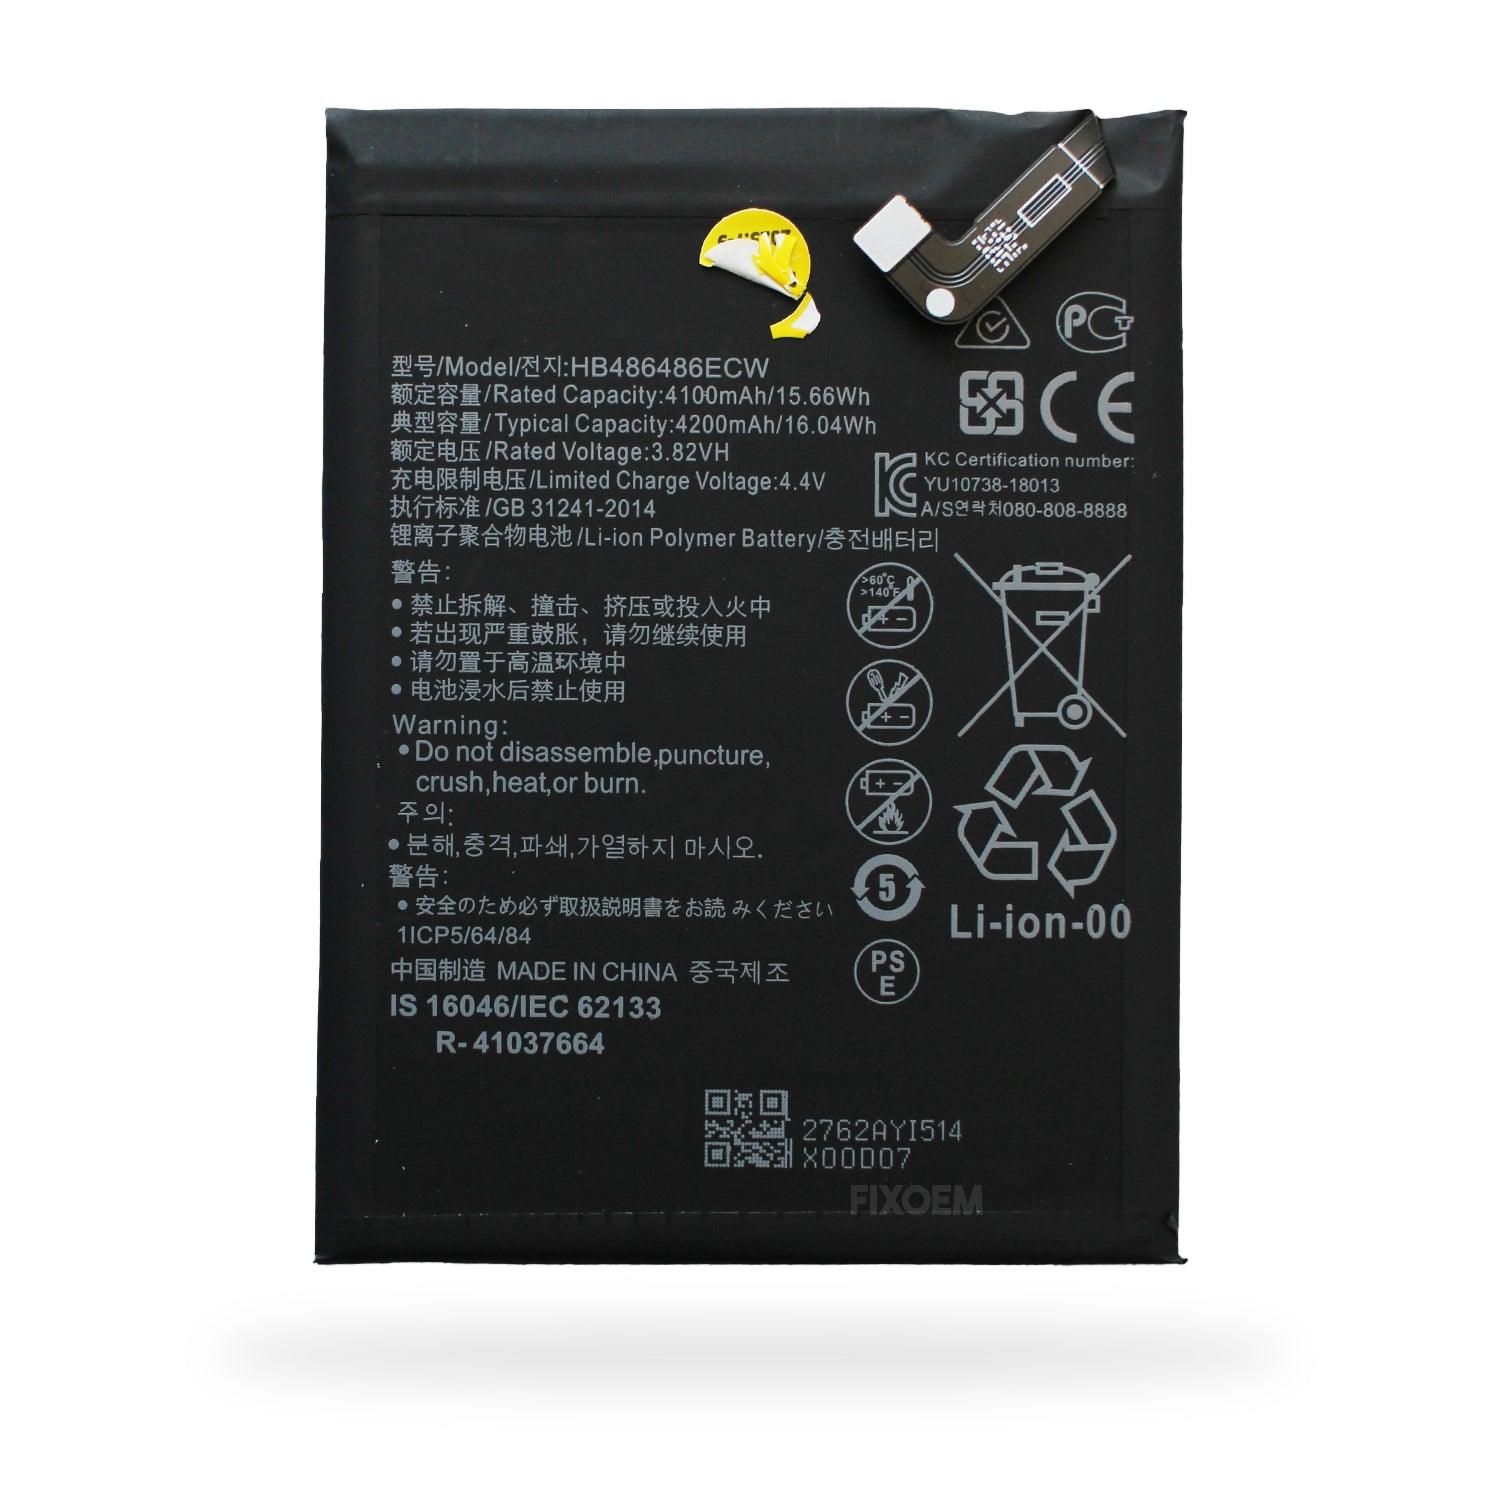 Bateria Huawei Mate 20 Pro Lya-L09 / P30 Pro Vog-L04 Hb486486Ecw. |+2,000 reseñas 4.8/5 ⭐